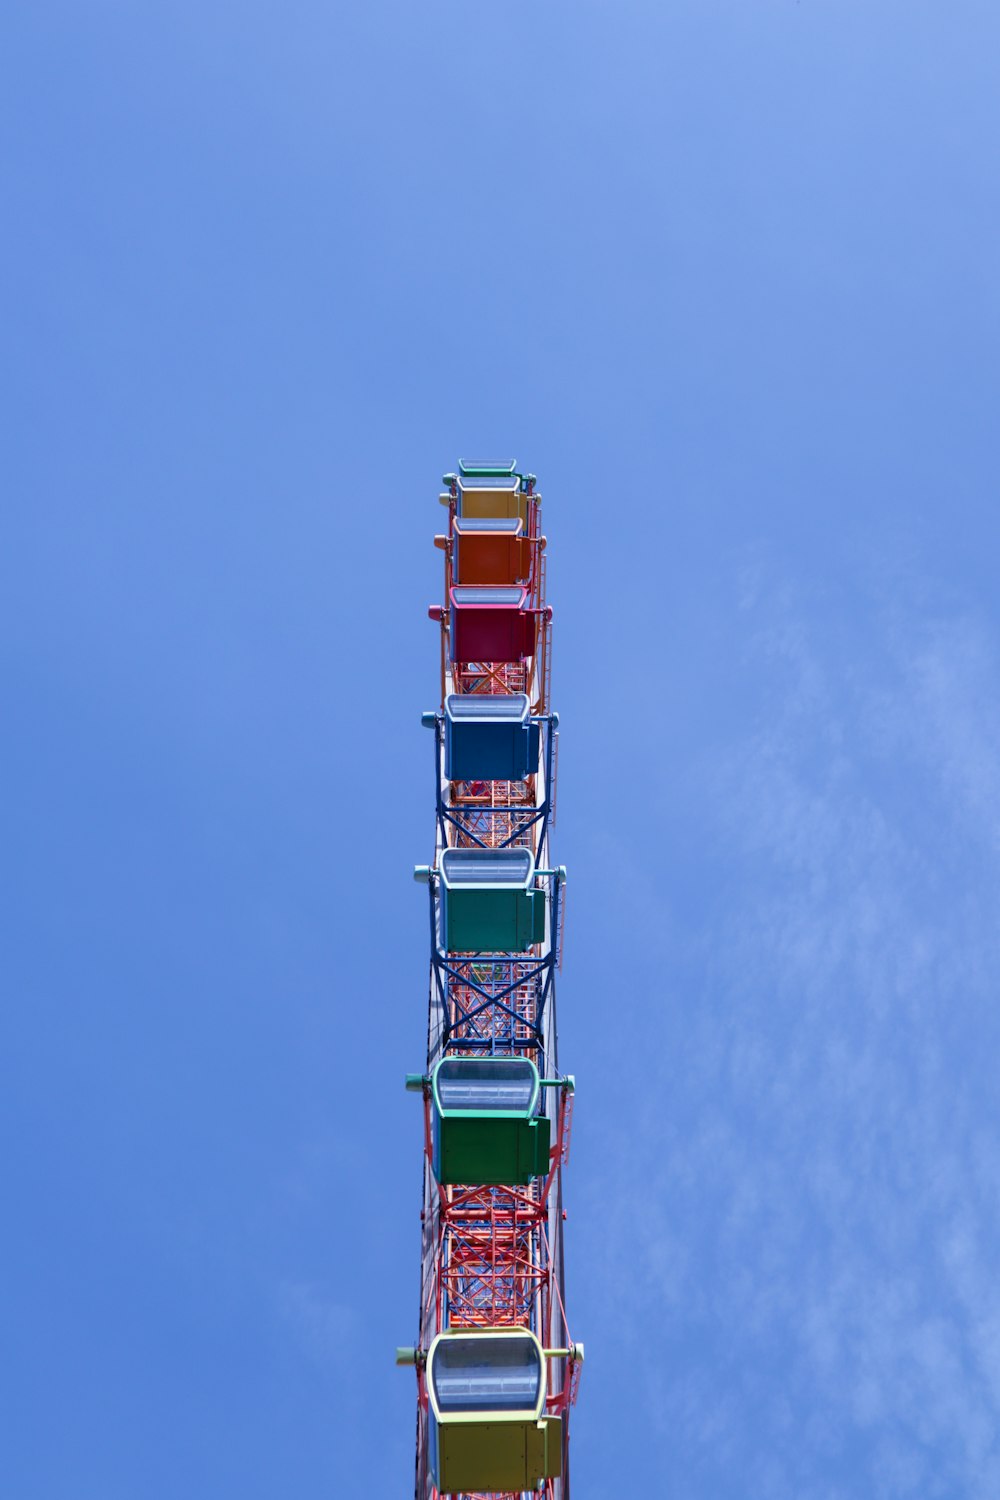 a colorful ferris wheel against a blue sky